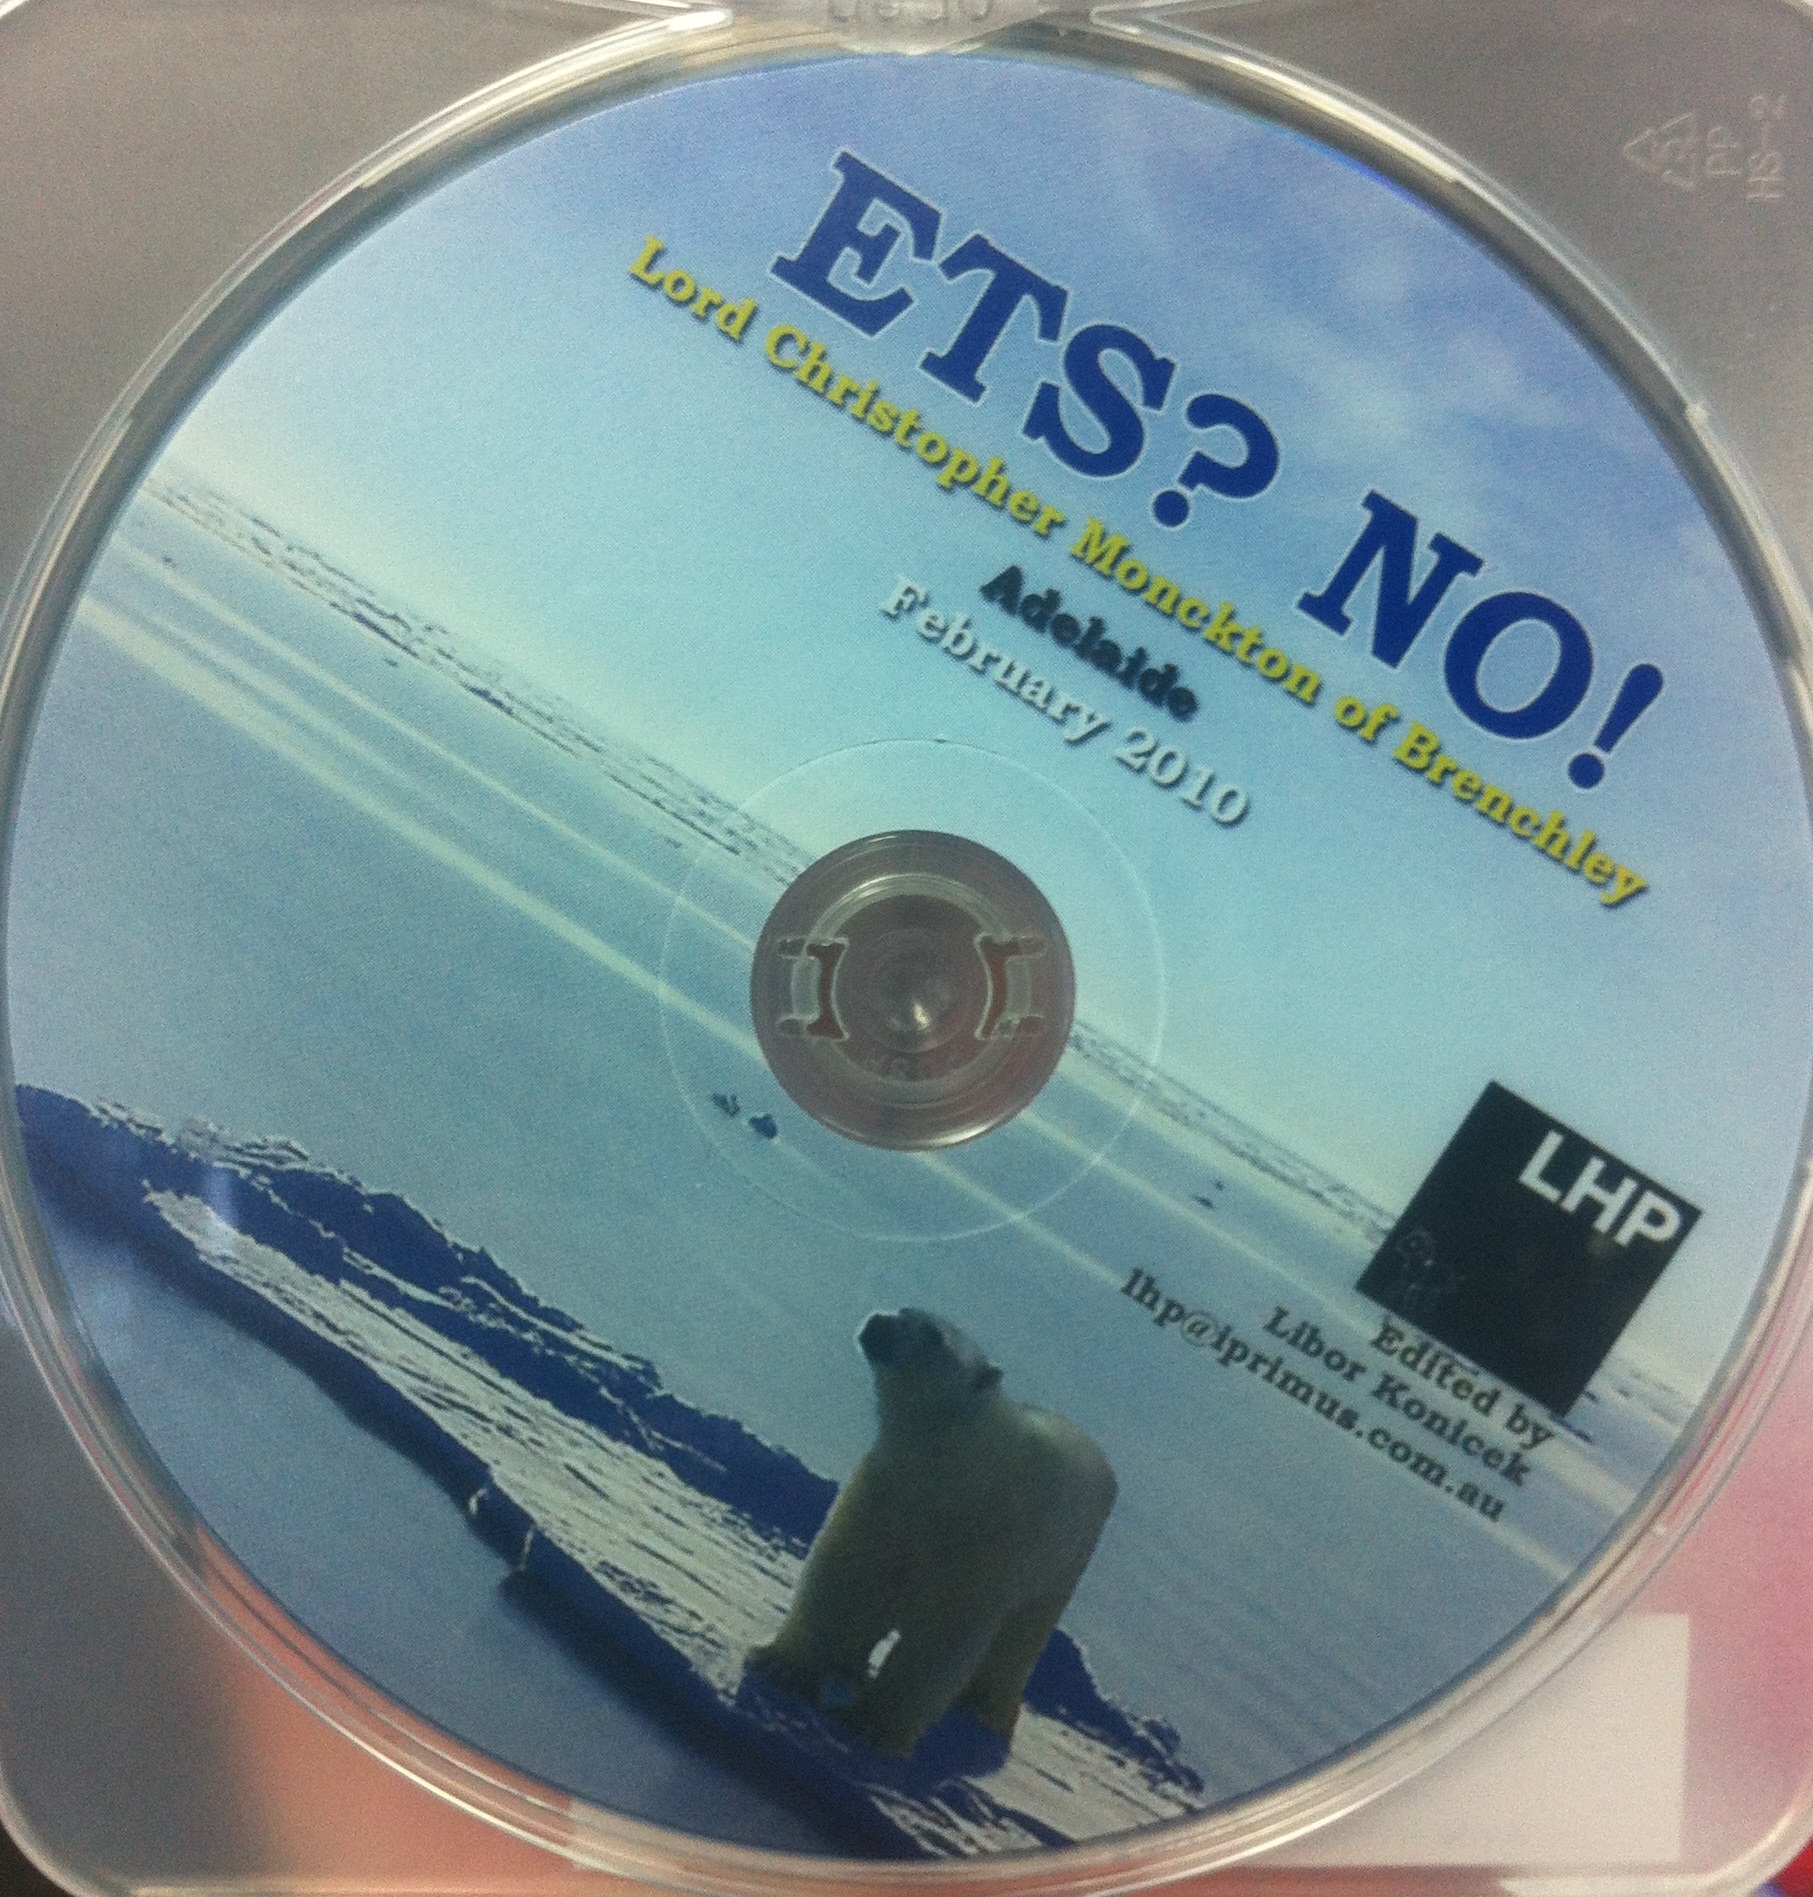 DVD ETS? No! / Christopher Monckton